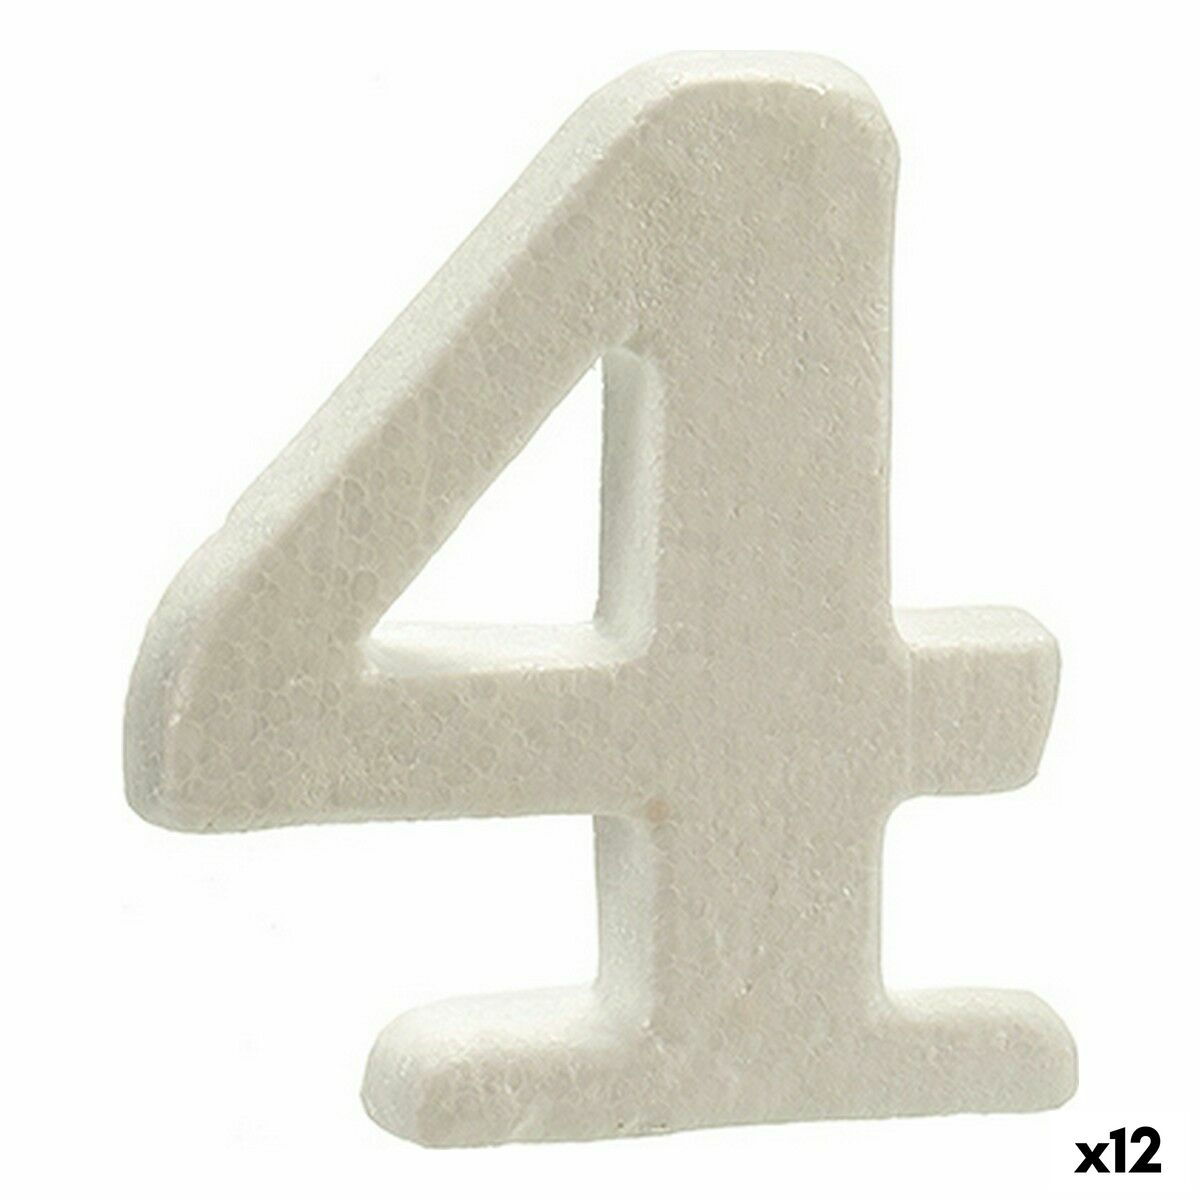 Numeri 4 Bianco polistirene 2 x 15 x 10 cm (12 Unità)